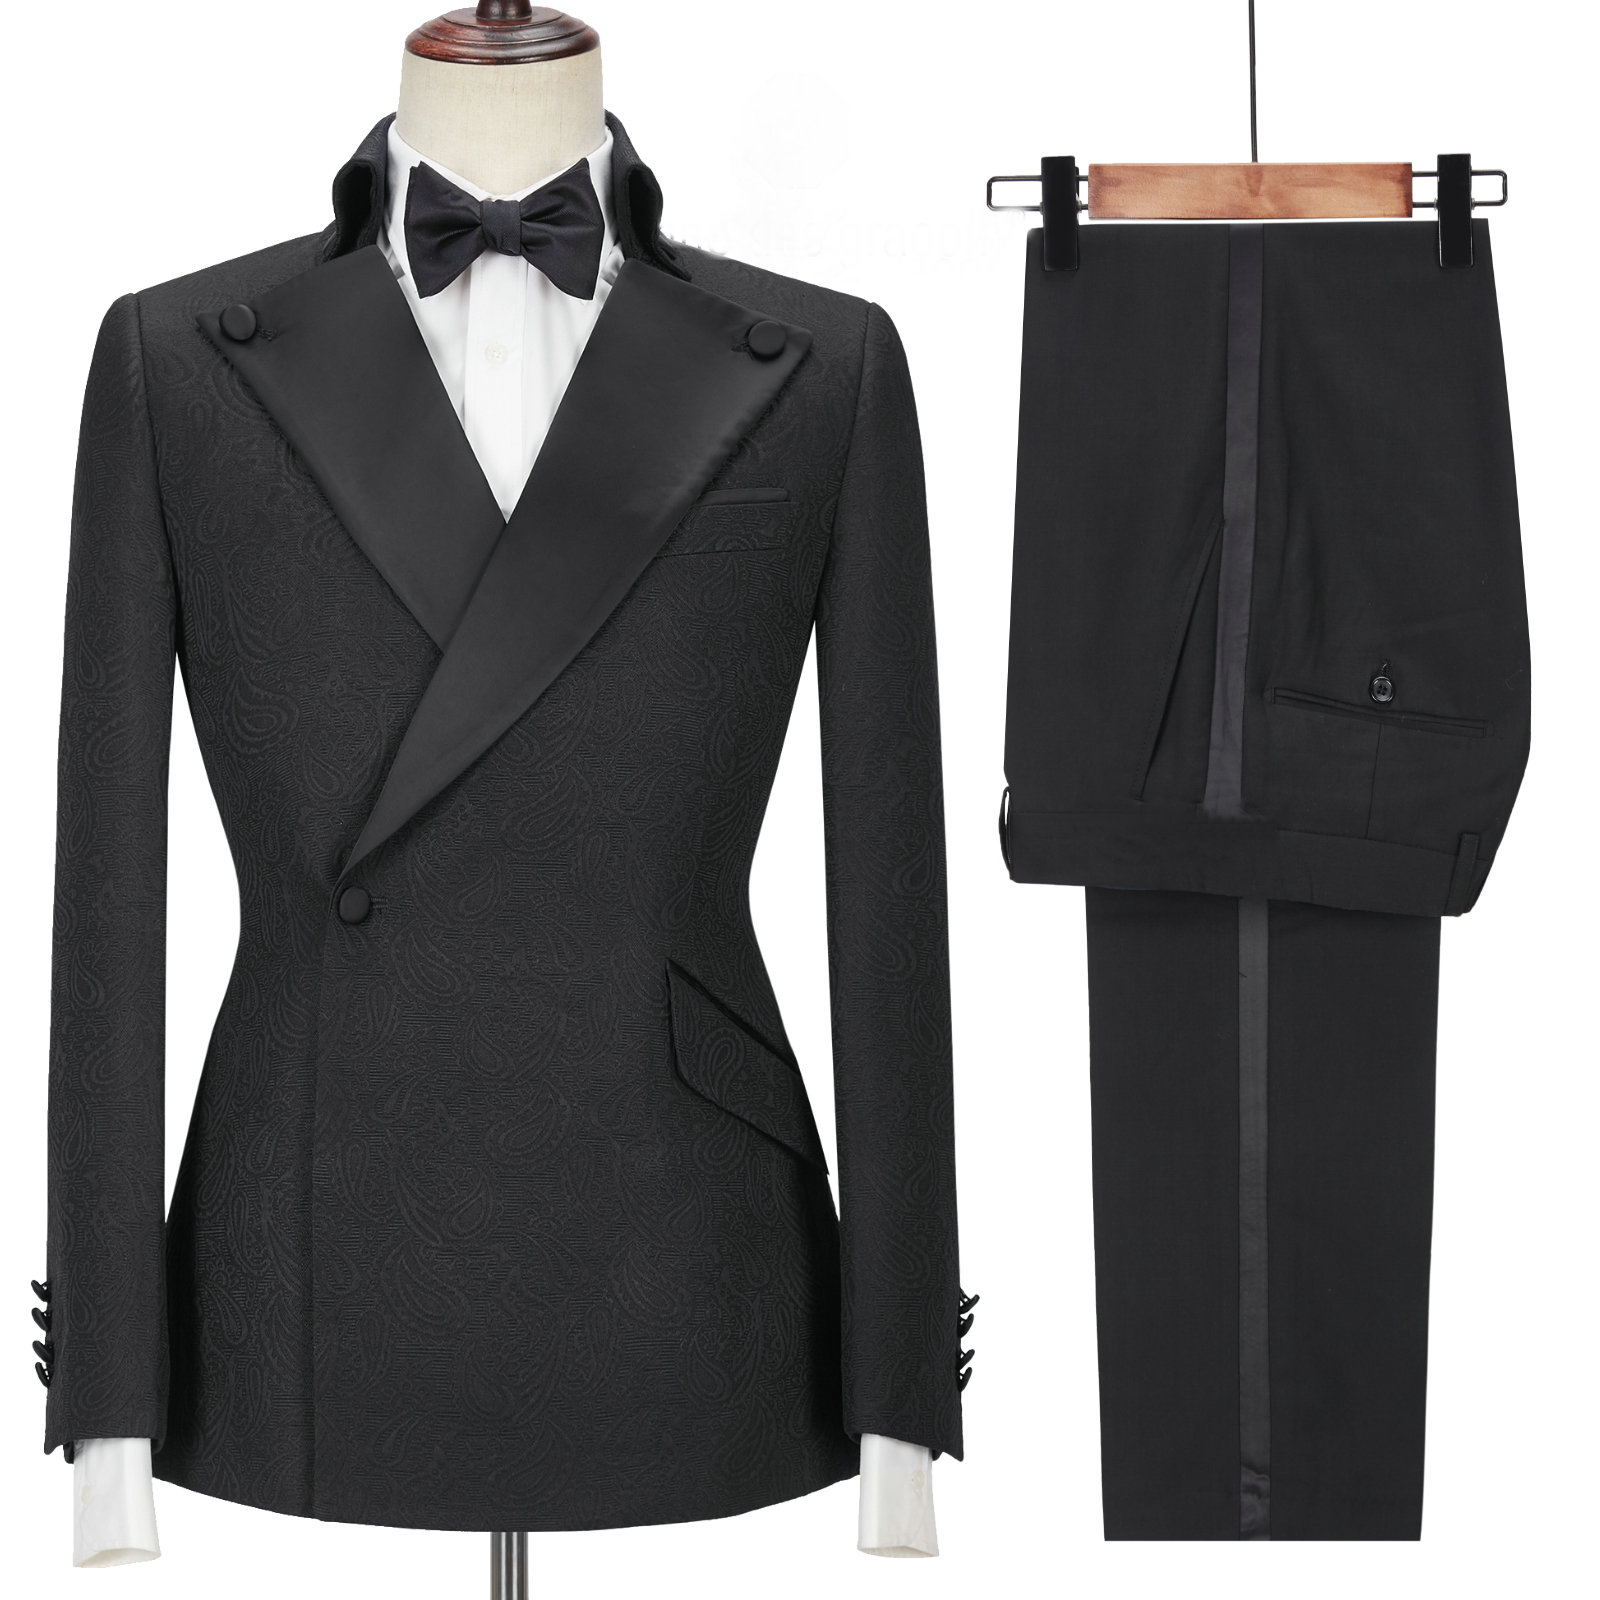 Tuxedo # 476 - The Gentlemens Closet